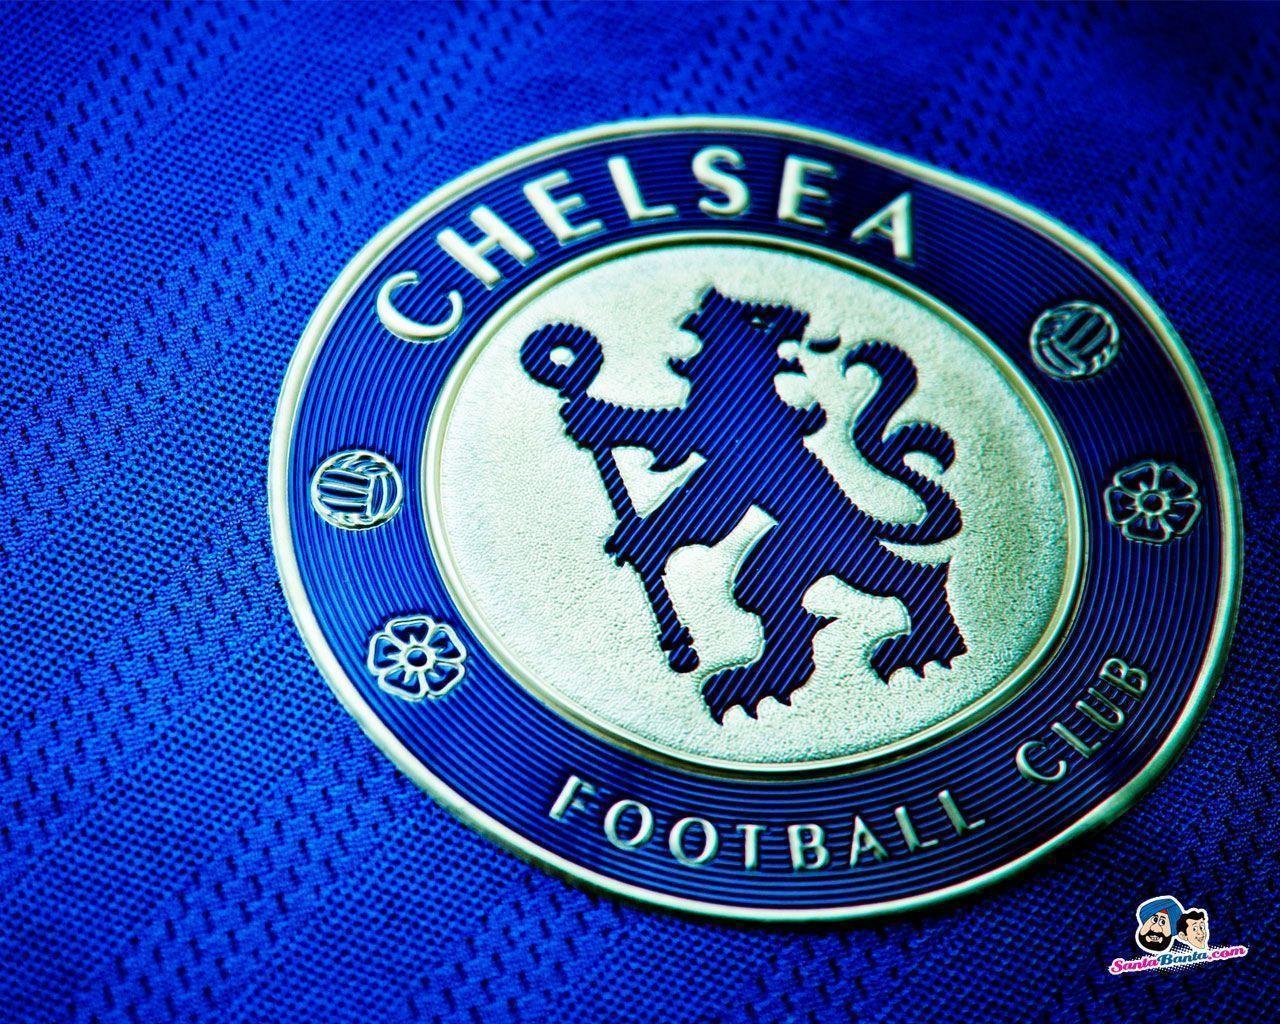 Chelsea Logo Wallpaper / Wallpaper Sport 22272 high quality